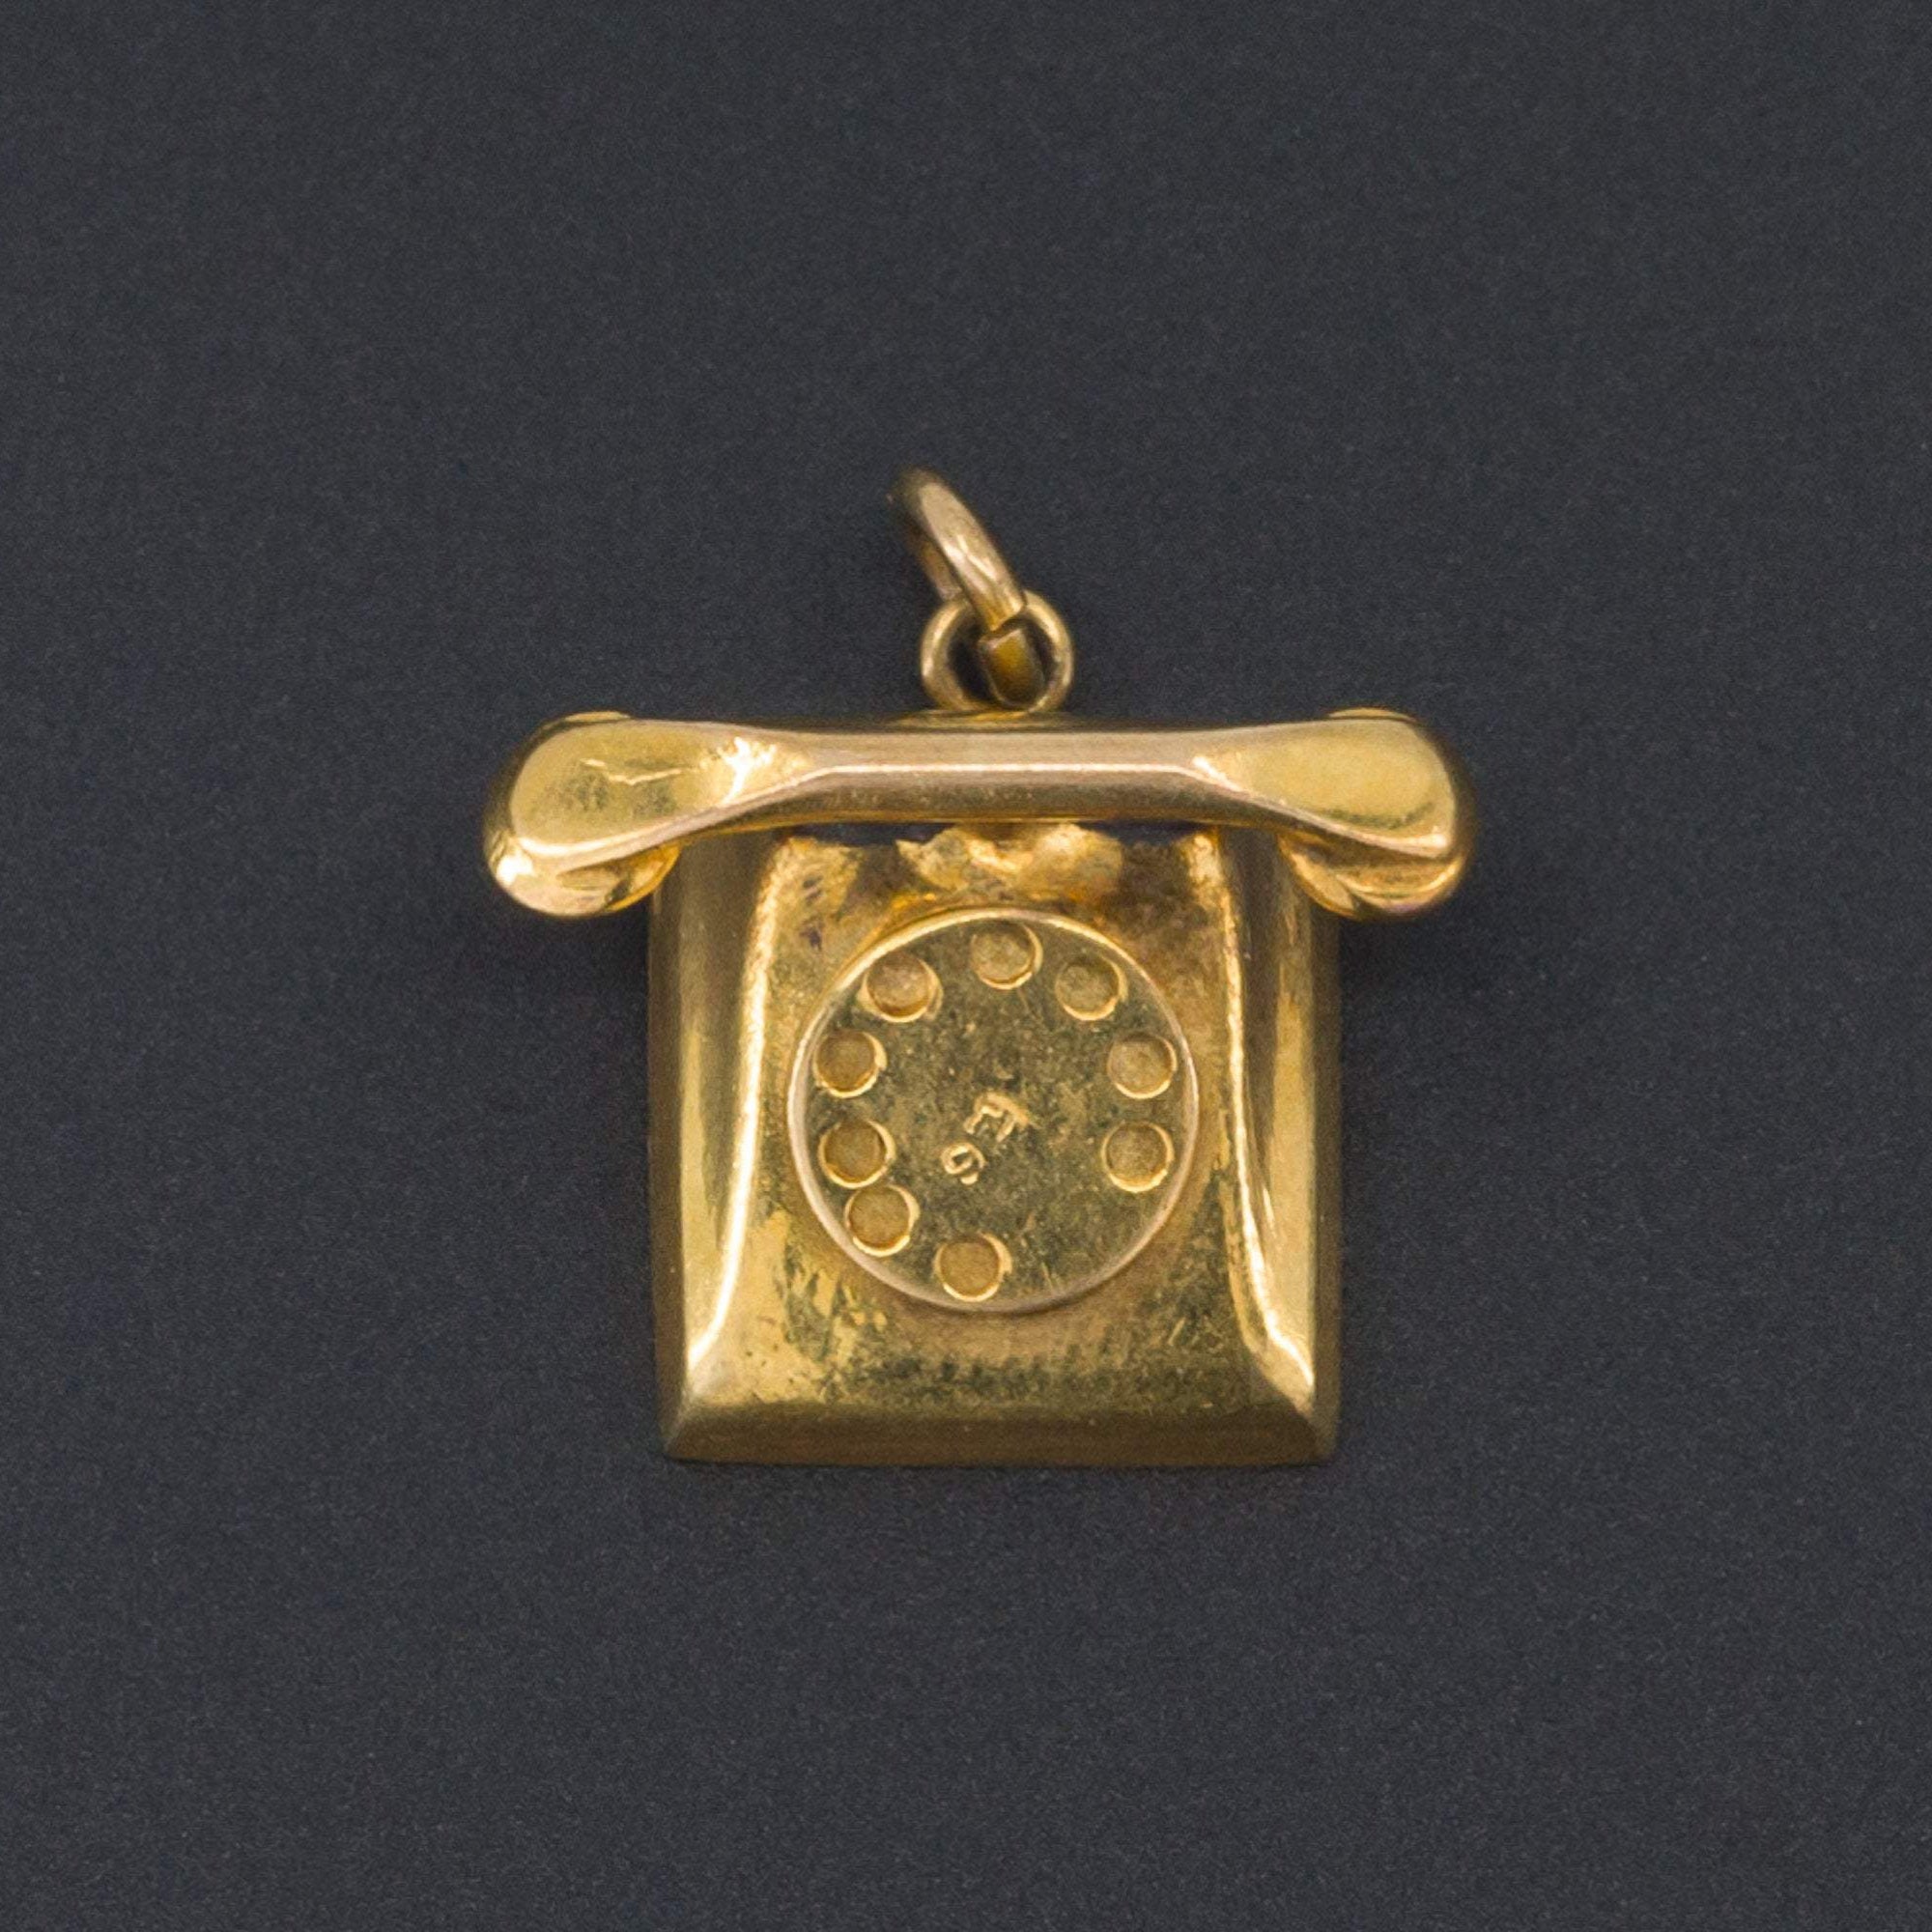 Vintage Rotary Phone Charm or Pendant | Rotary Telephone Charm or Pendant | 9ct Gold Charm